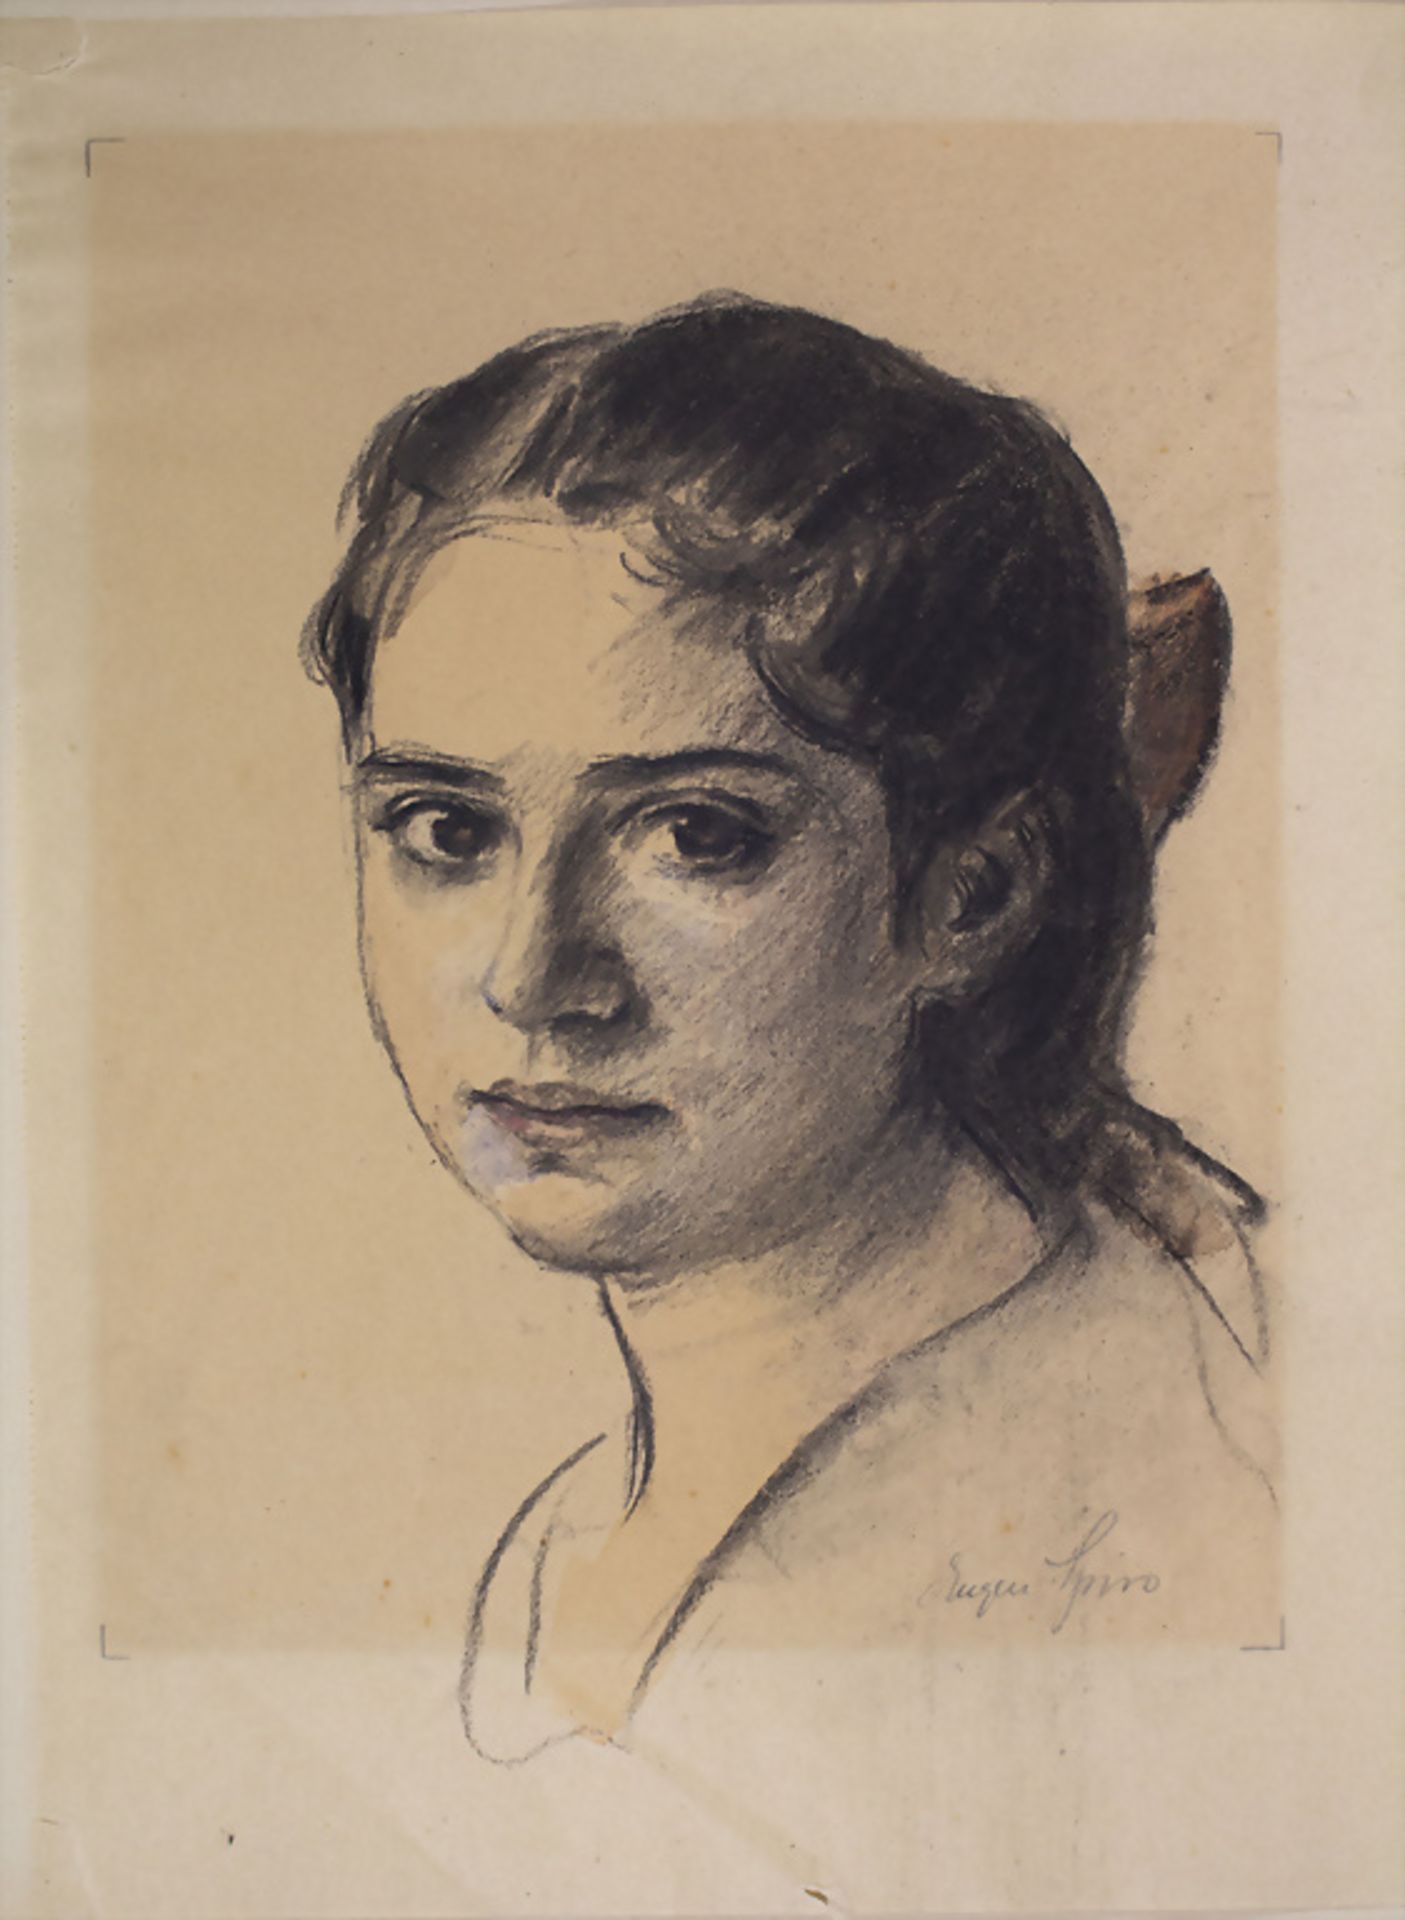 Eugen SPIRO (1874-1972), 'Porträtkopf Mädchen' / 'Portrait of a girl'